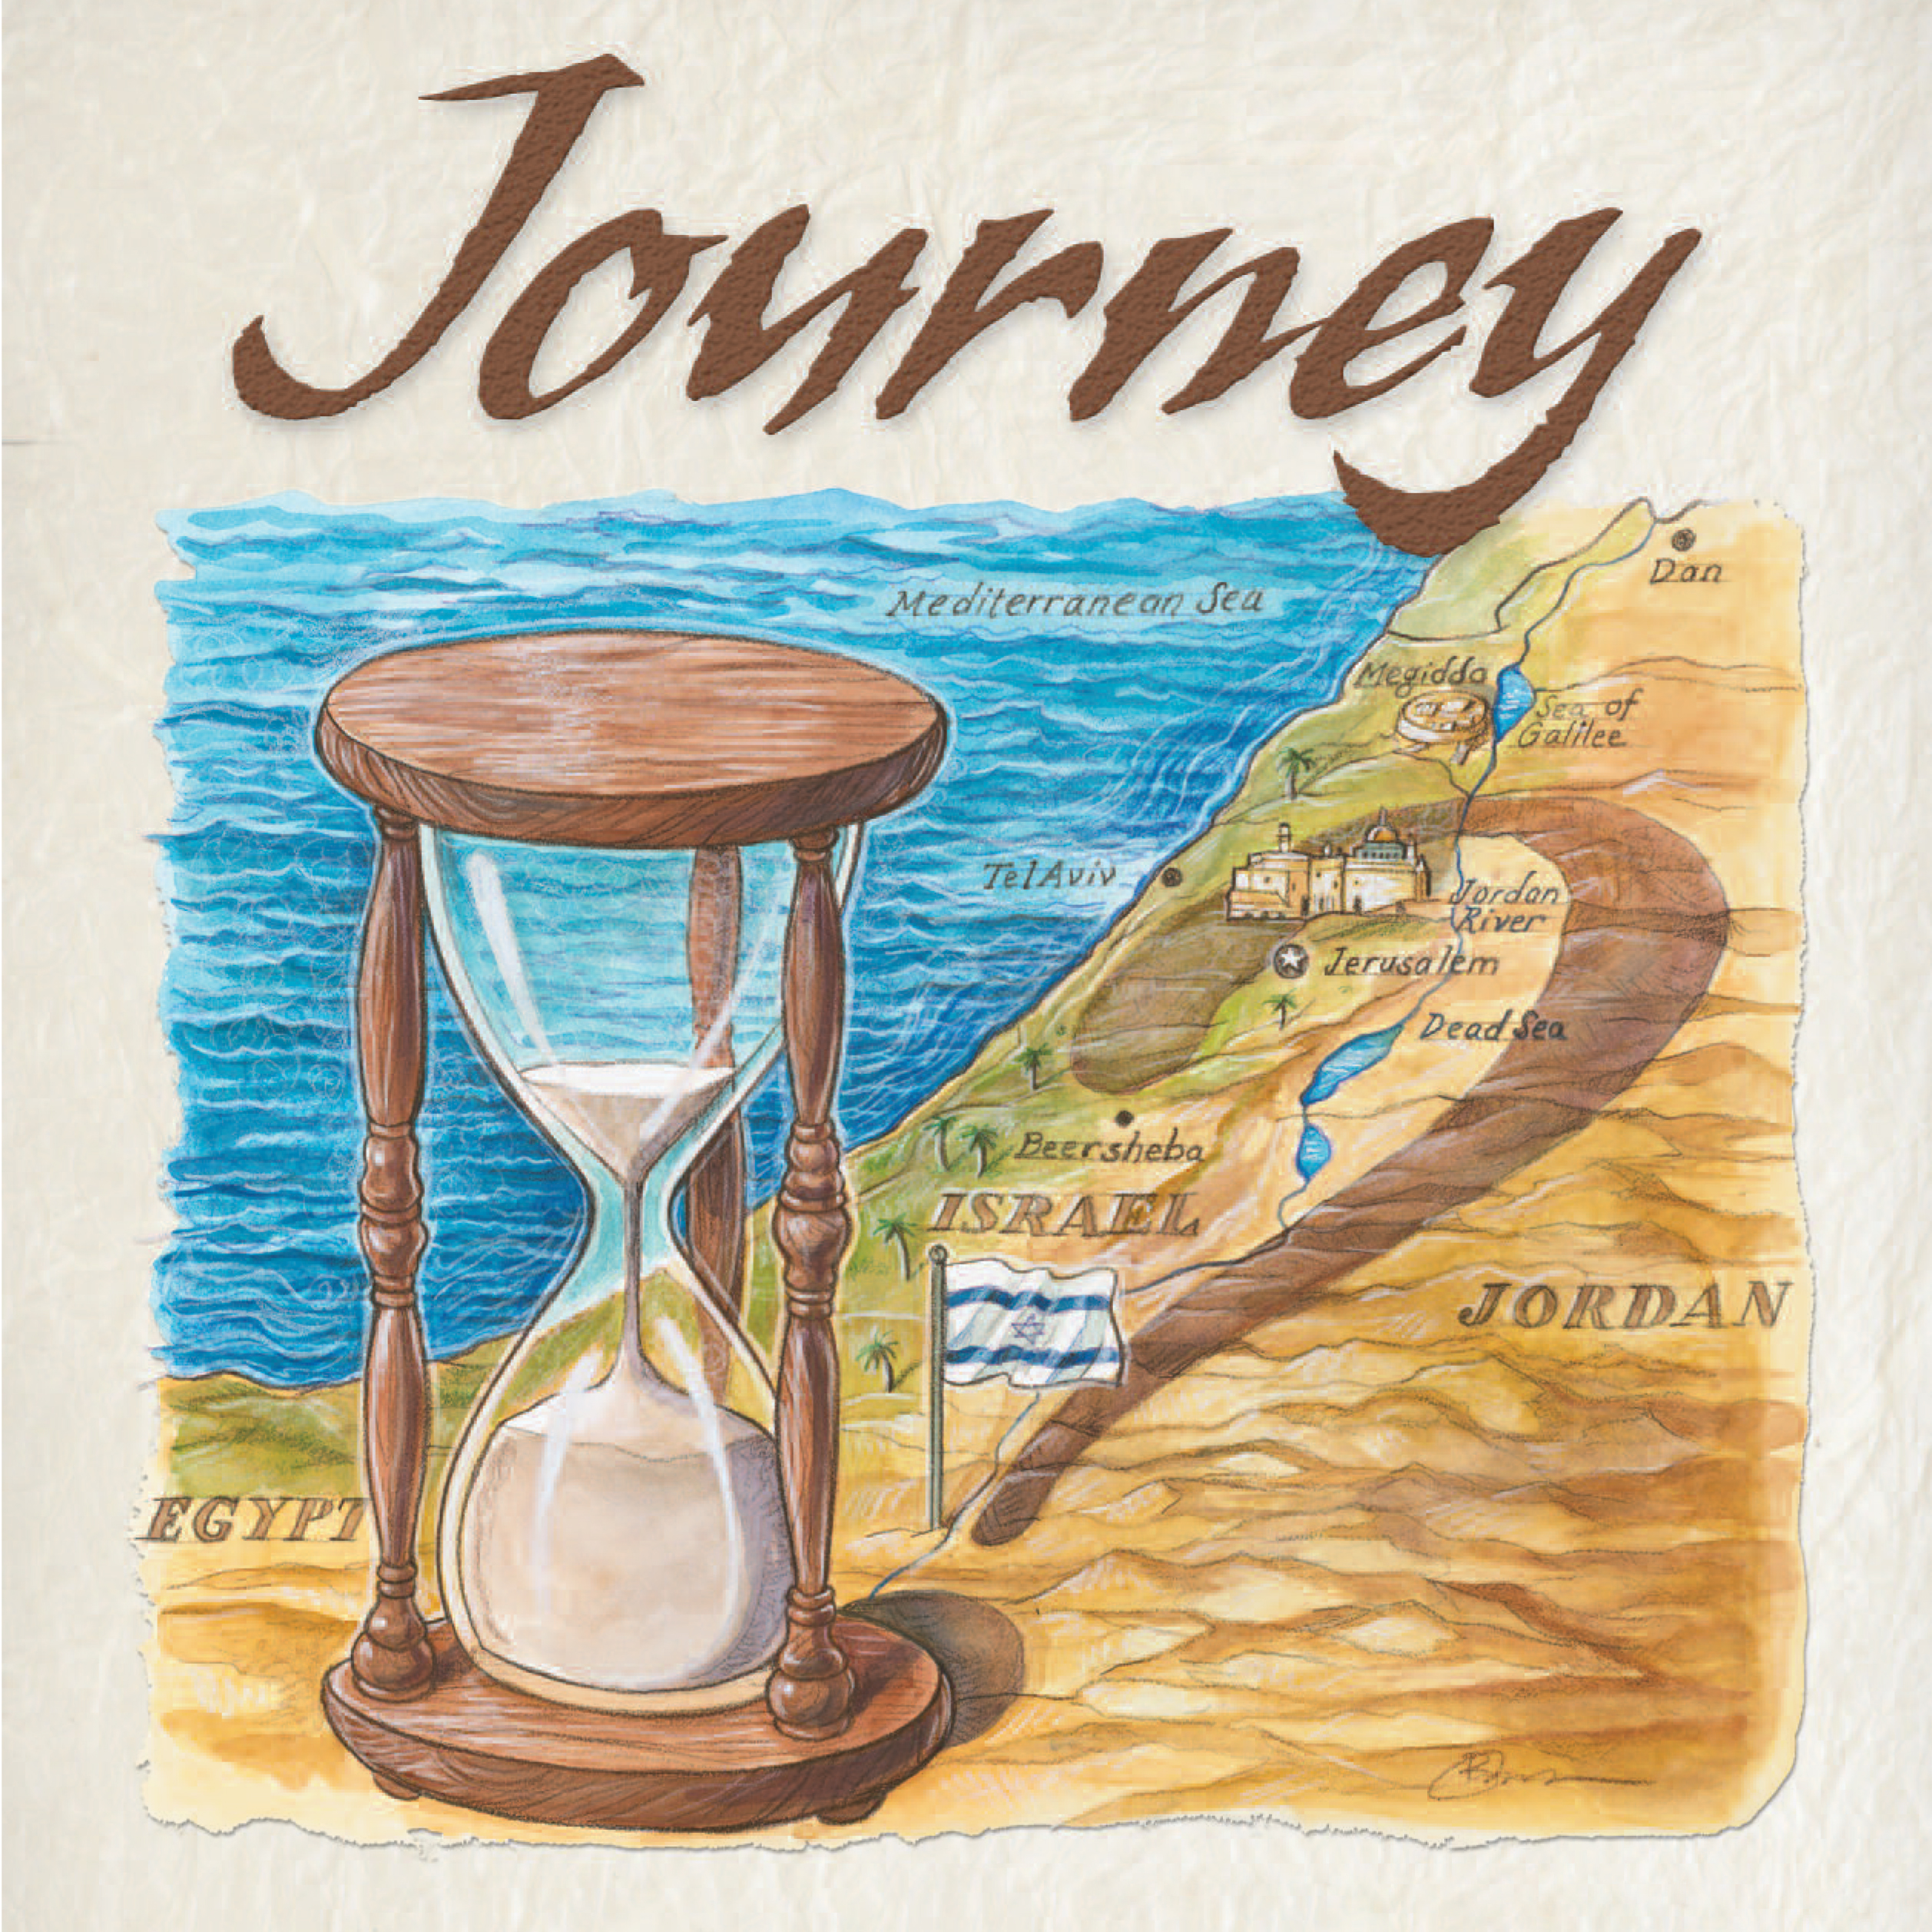 Journey magazine cover photo